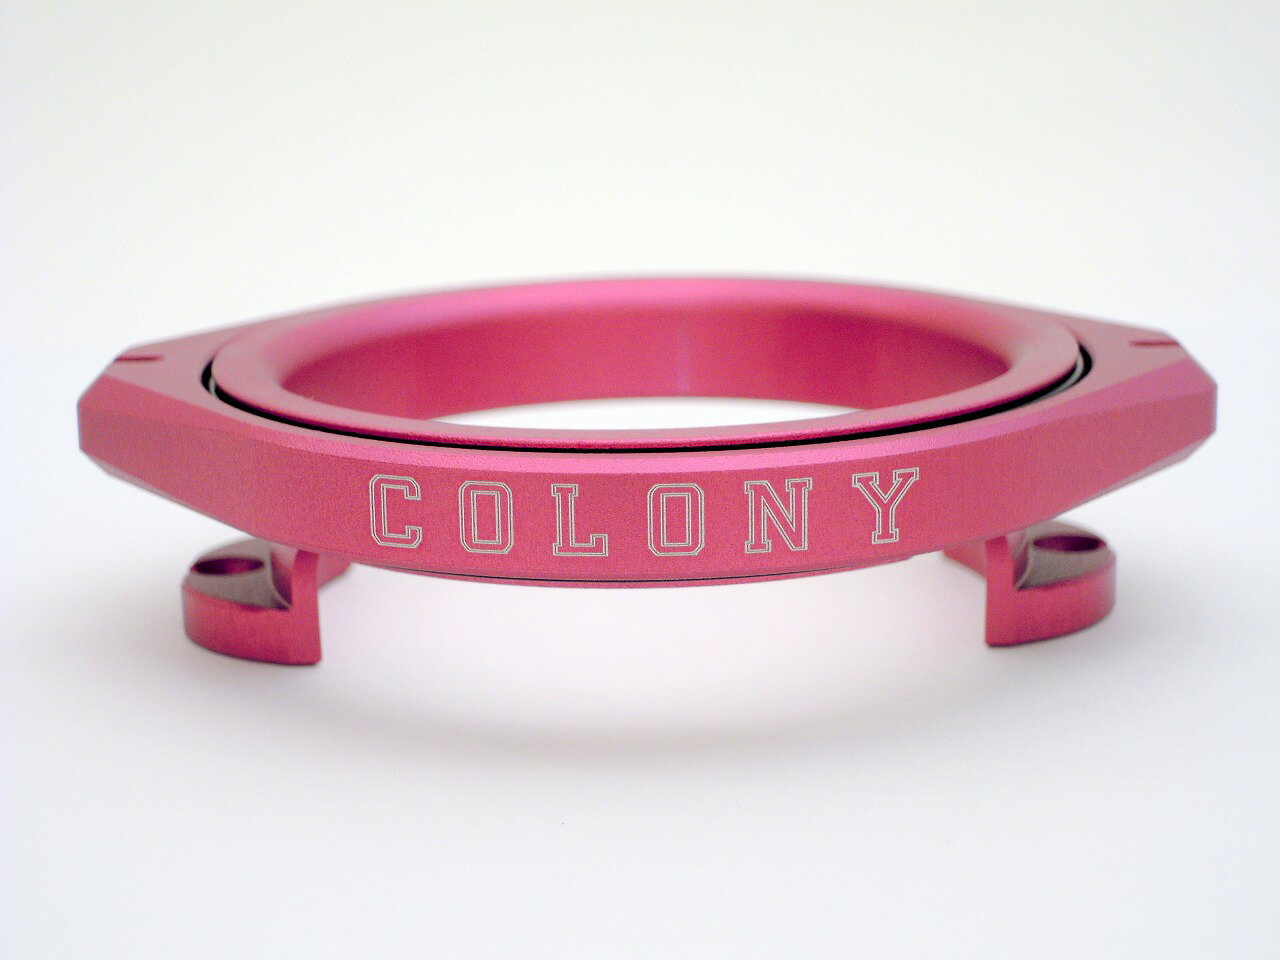 COLONY RX3 Rotary Detangler! ・メーカー名：COLONY ・商品名：RX3 Rotary Detangler ・商品内容：BMX ジャイロローター ・カラー：ピンク ・重量：31g ・注意点：お使いのモニターによって色合いが異なることがあります。